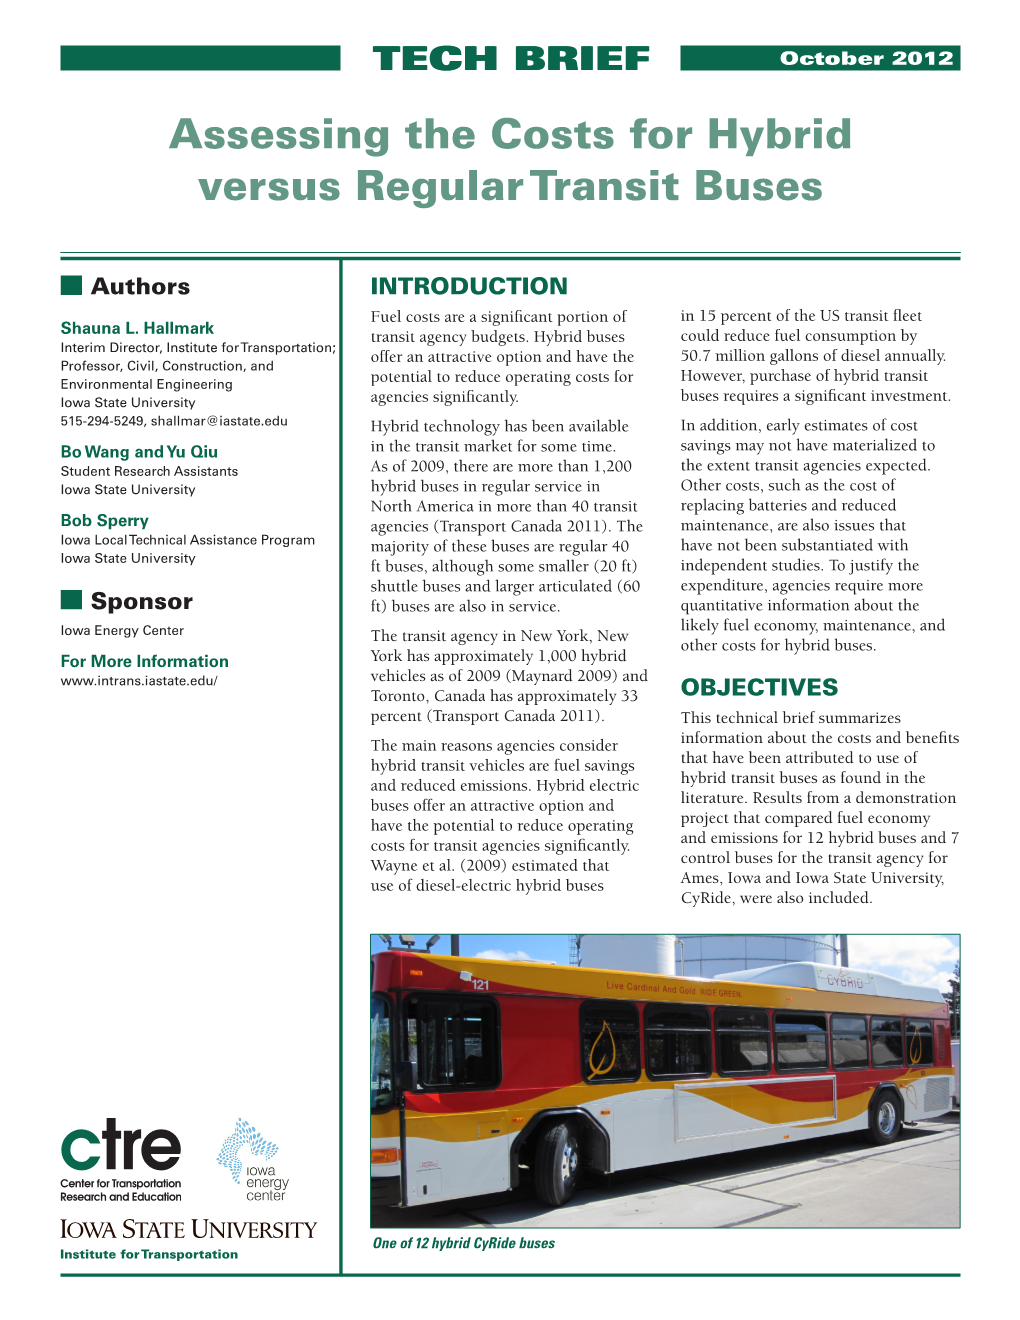 Assessing the Costs for Hybrid Versus Regular Transit Buses